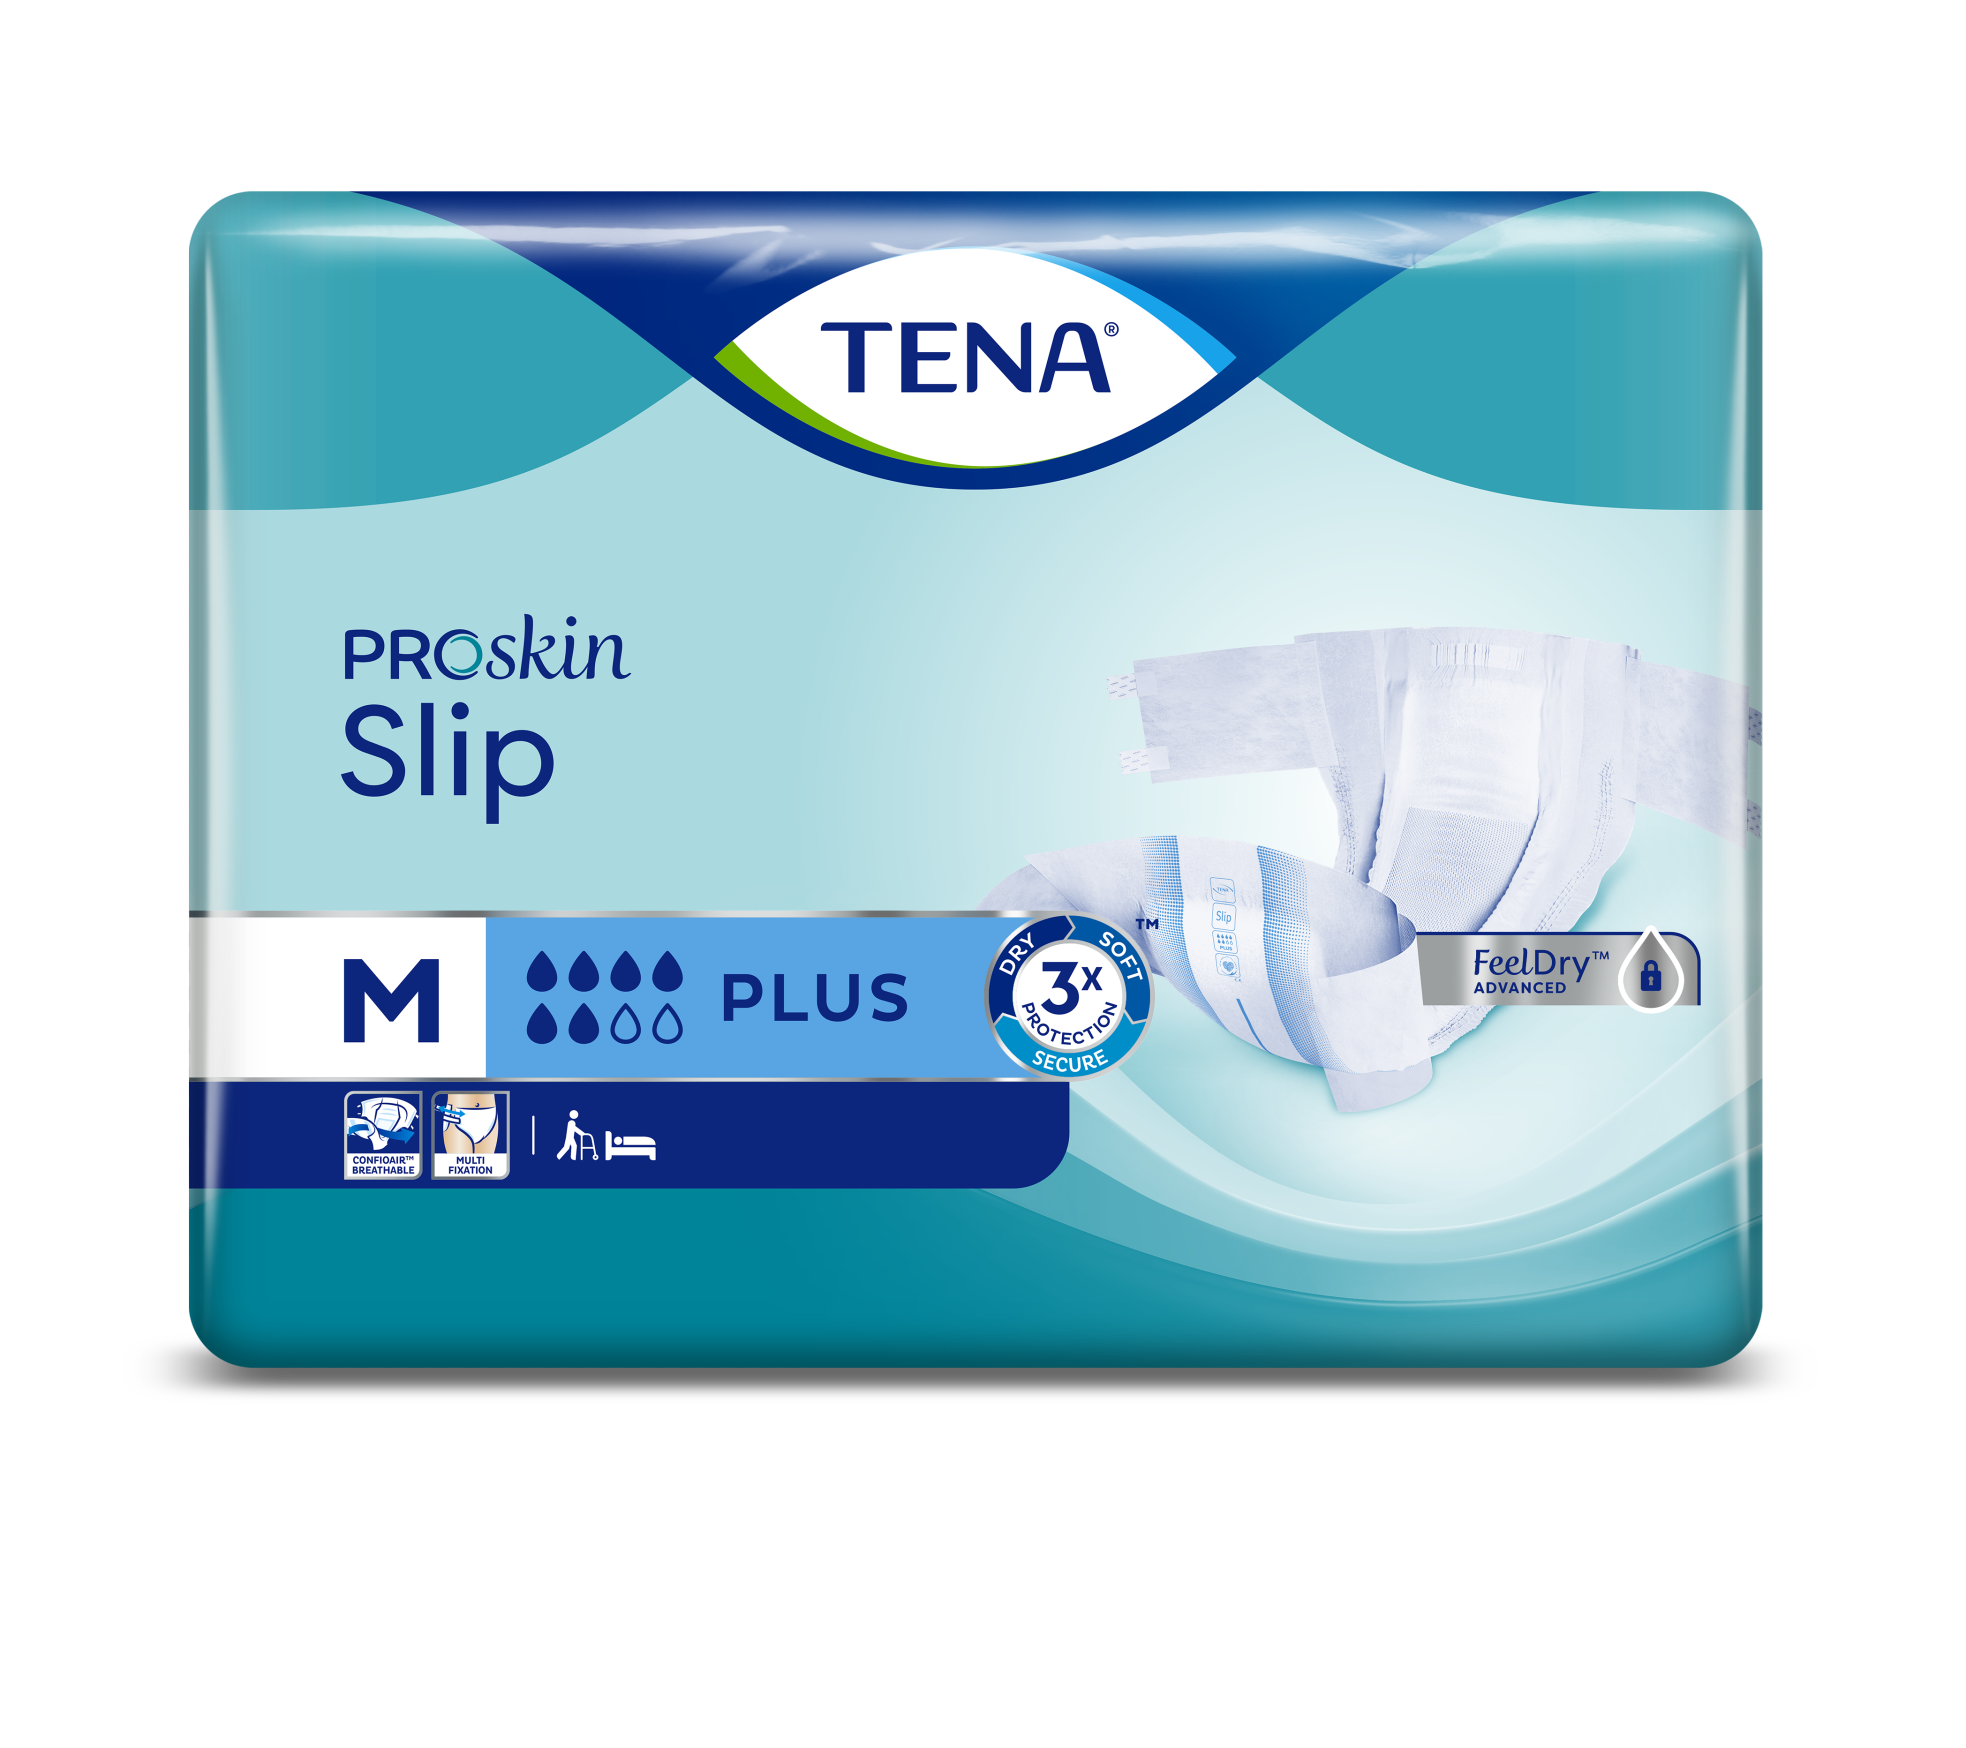 TENA-Slip-Plus-McCohen-ProSkin-pack.png